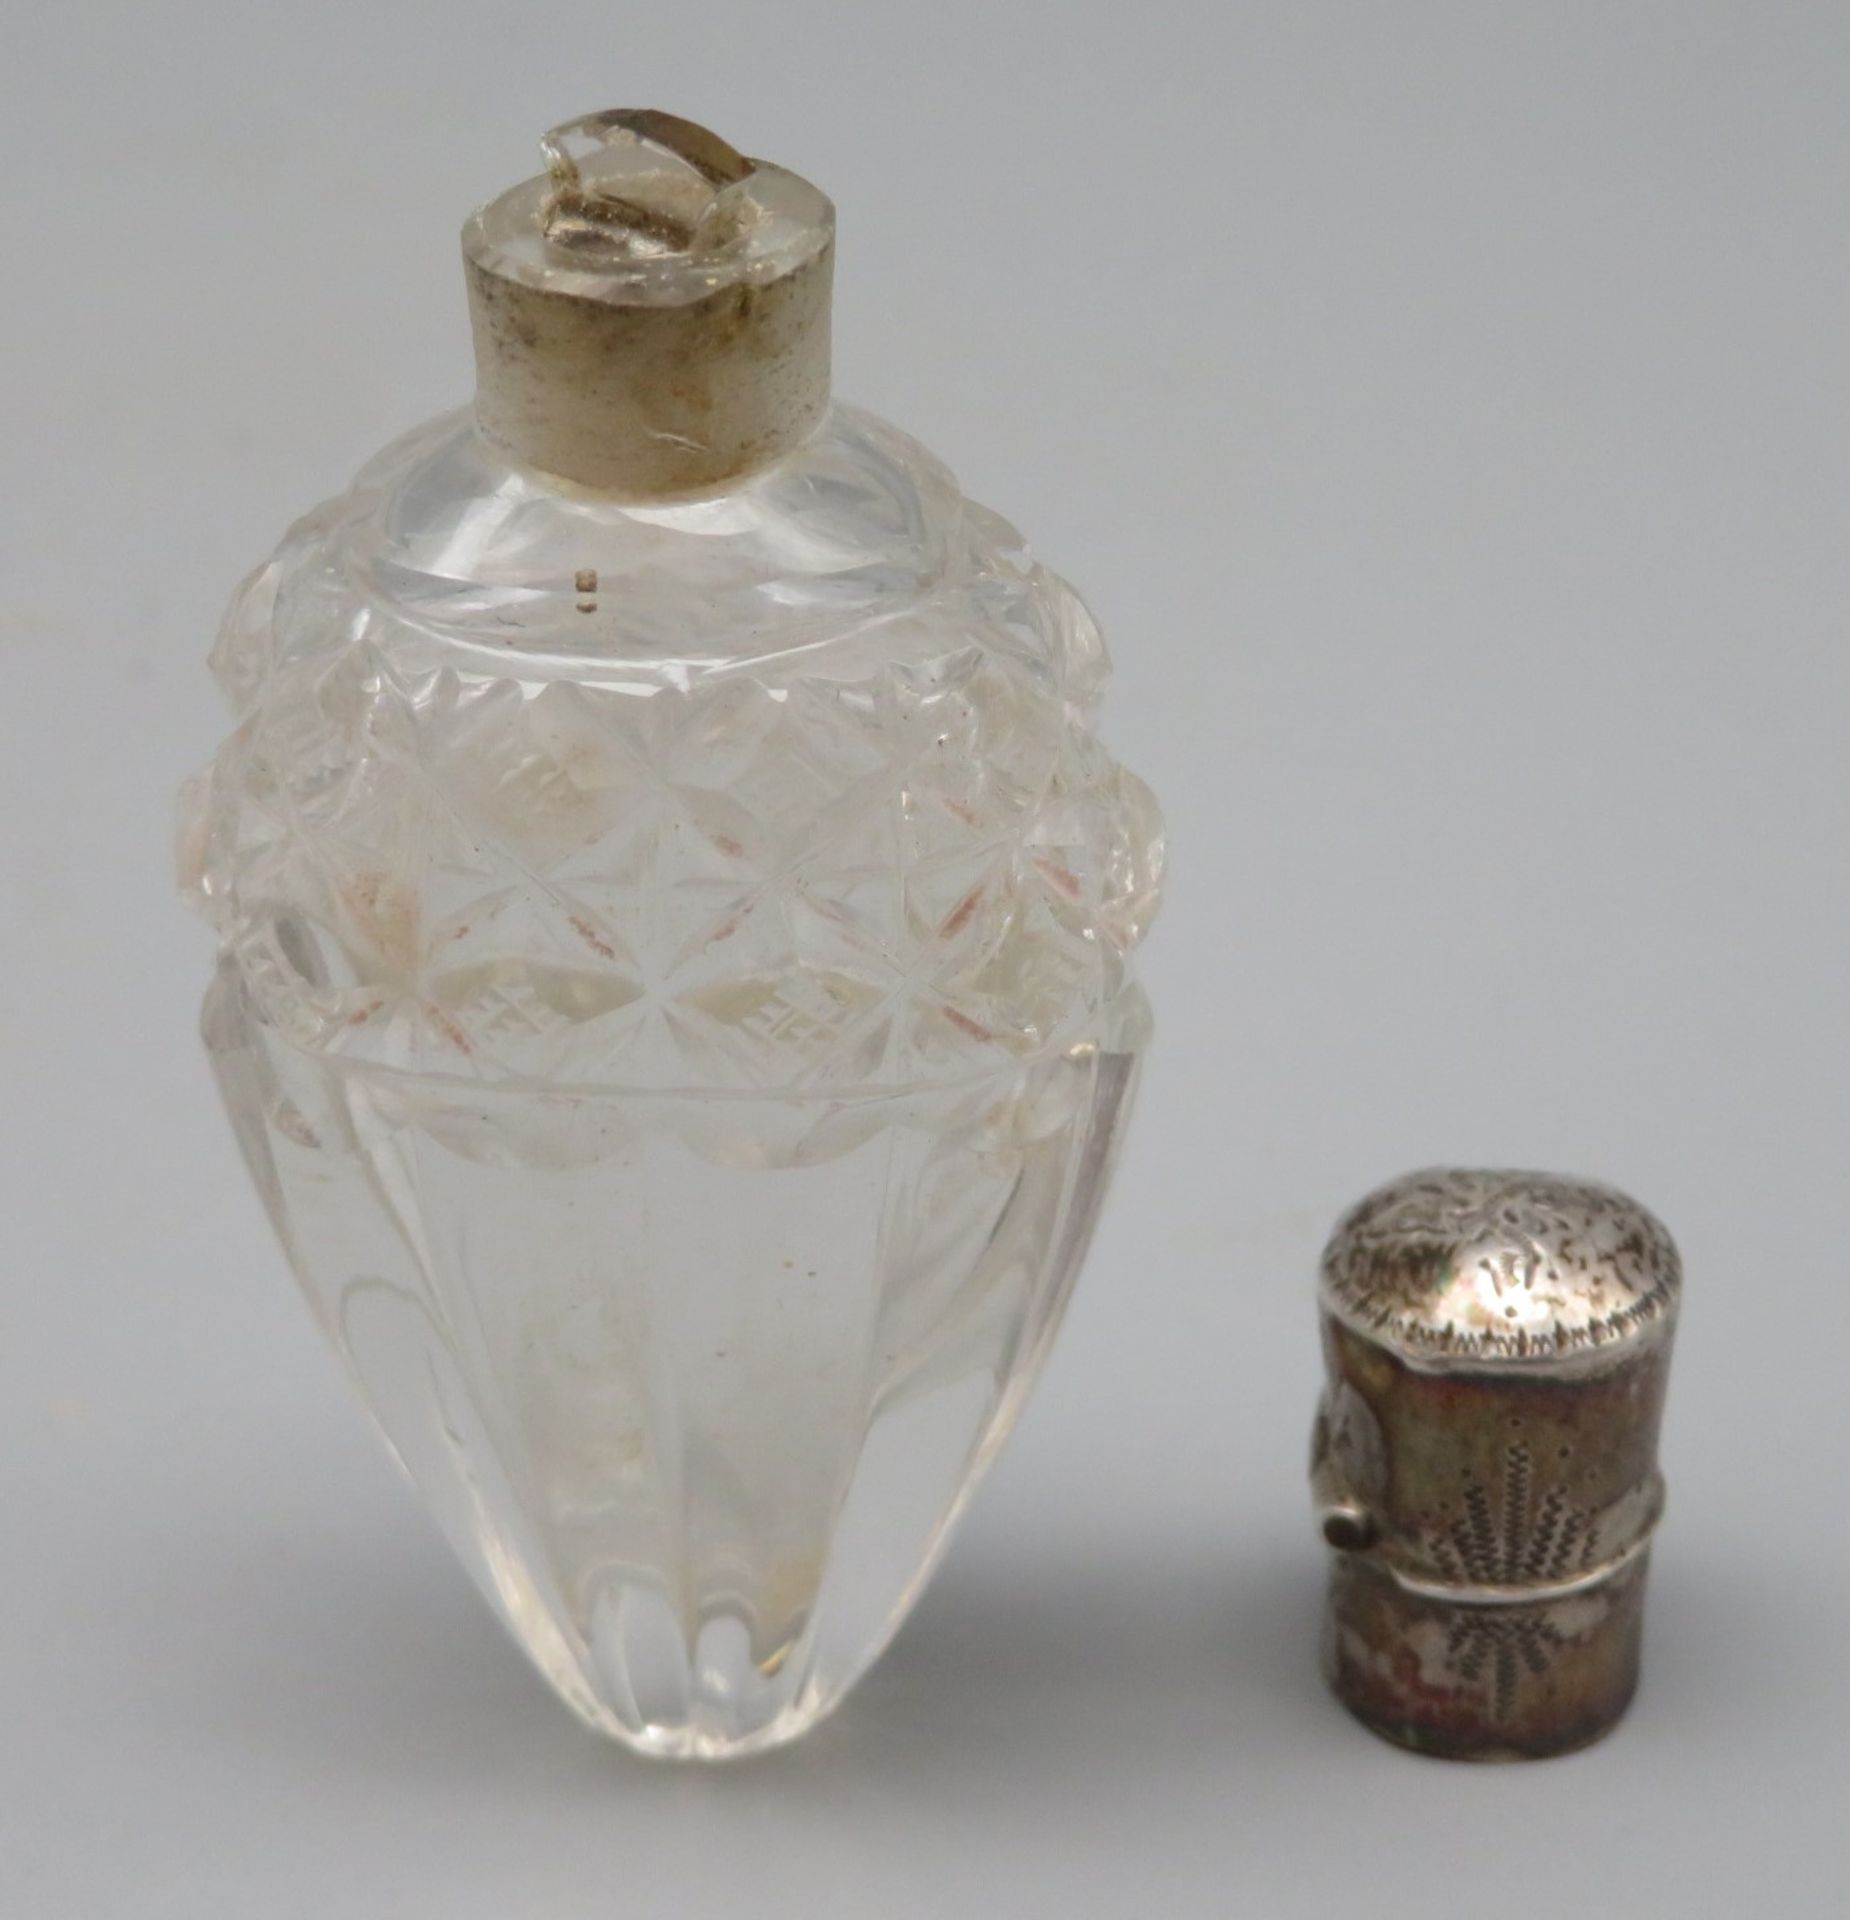 Parfumflakon, 19. Jahrhundert, farbloses Glas geschliffen, Silbermontur, l 7,2 cm, d 3,3 cm. - Image 2 of 2